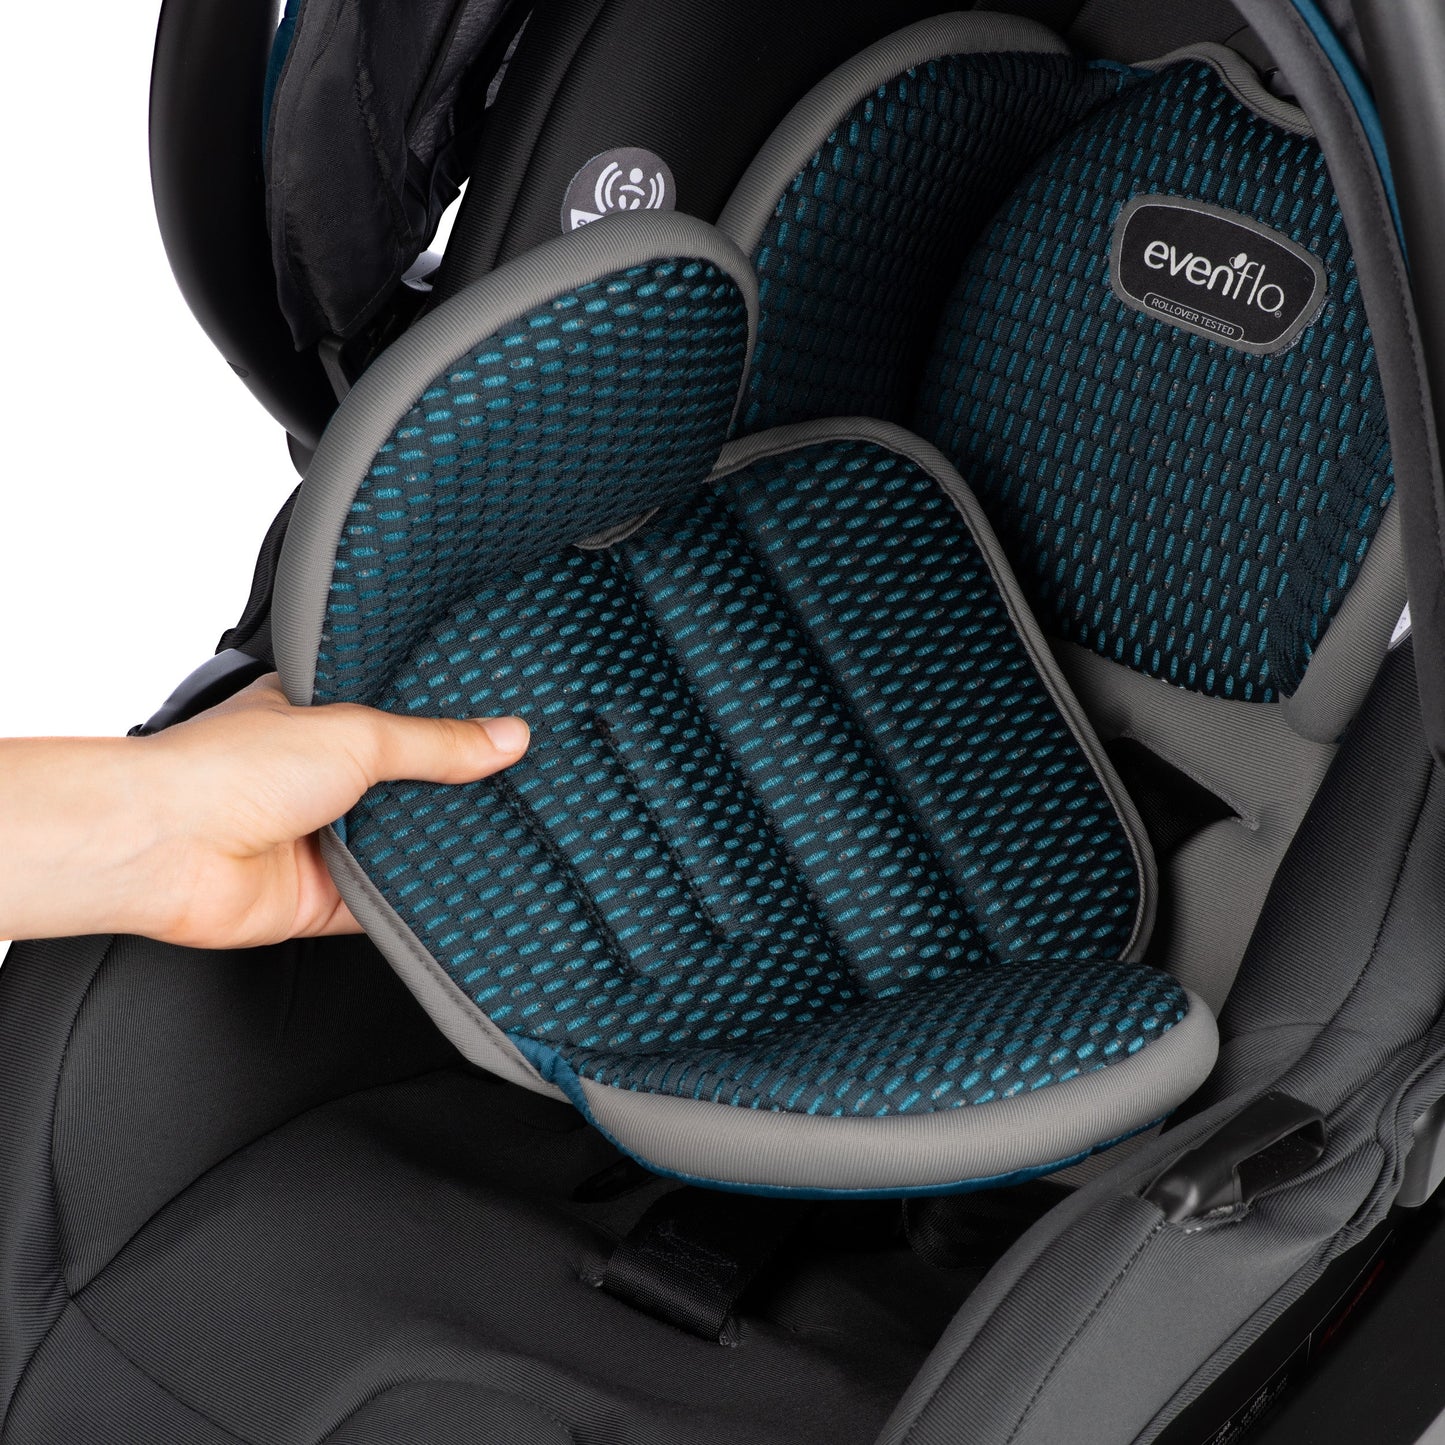 New Evenflo LiteMax DLX Infant Car Seat with SafeZone Load Leg Base